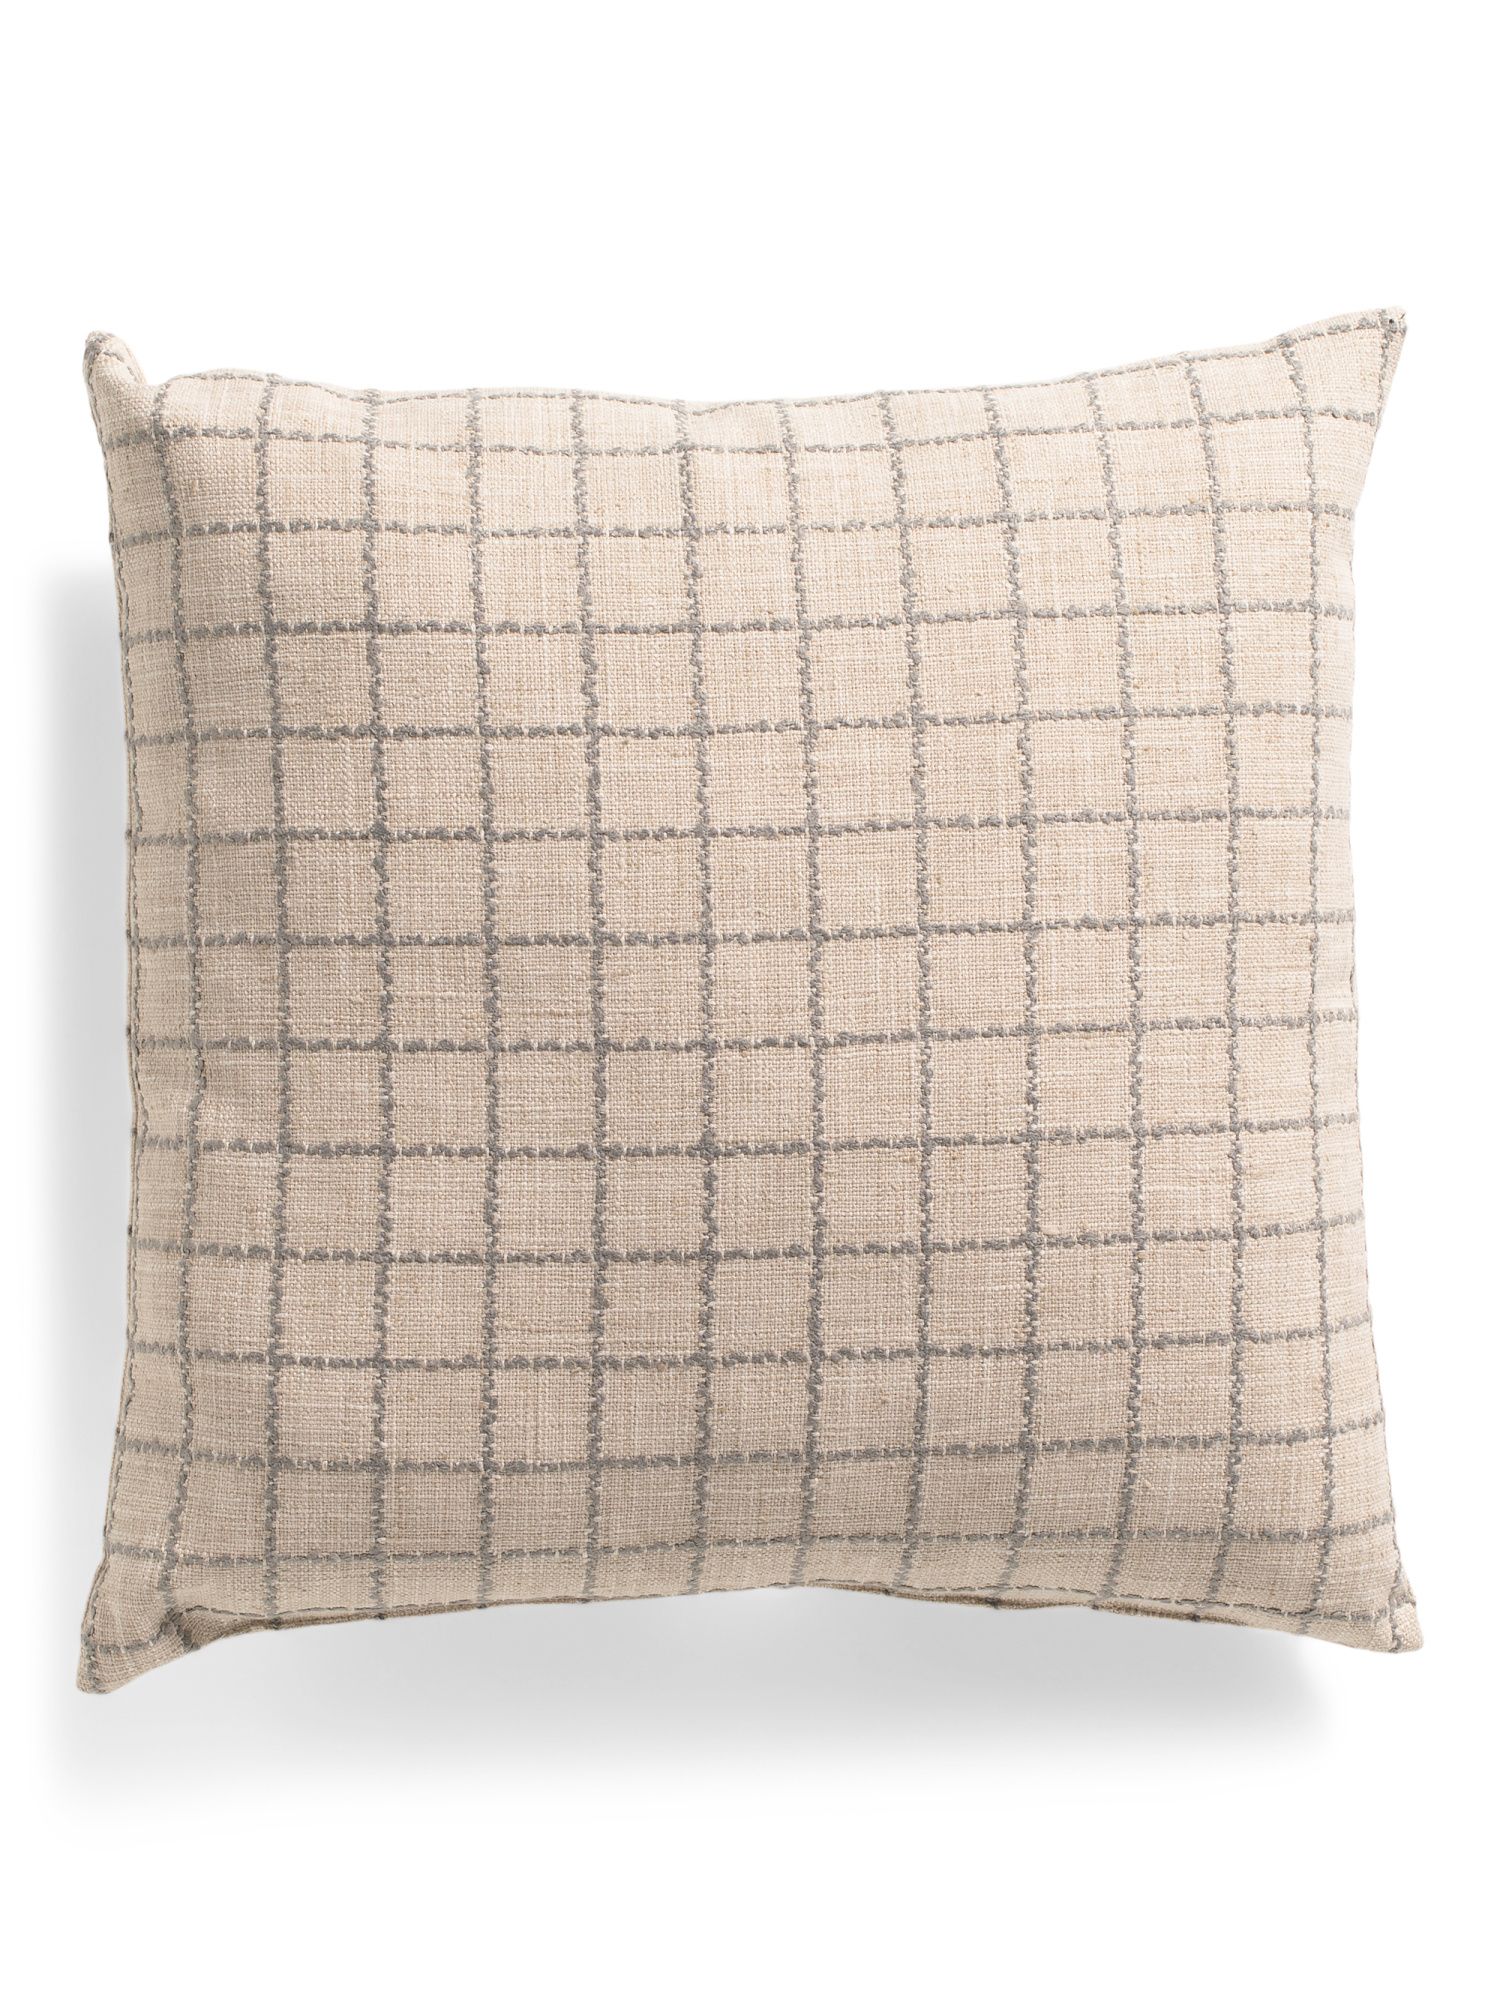 Made In Usa 22x22 Checkered Pillow | TJ Maxx